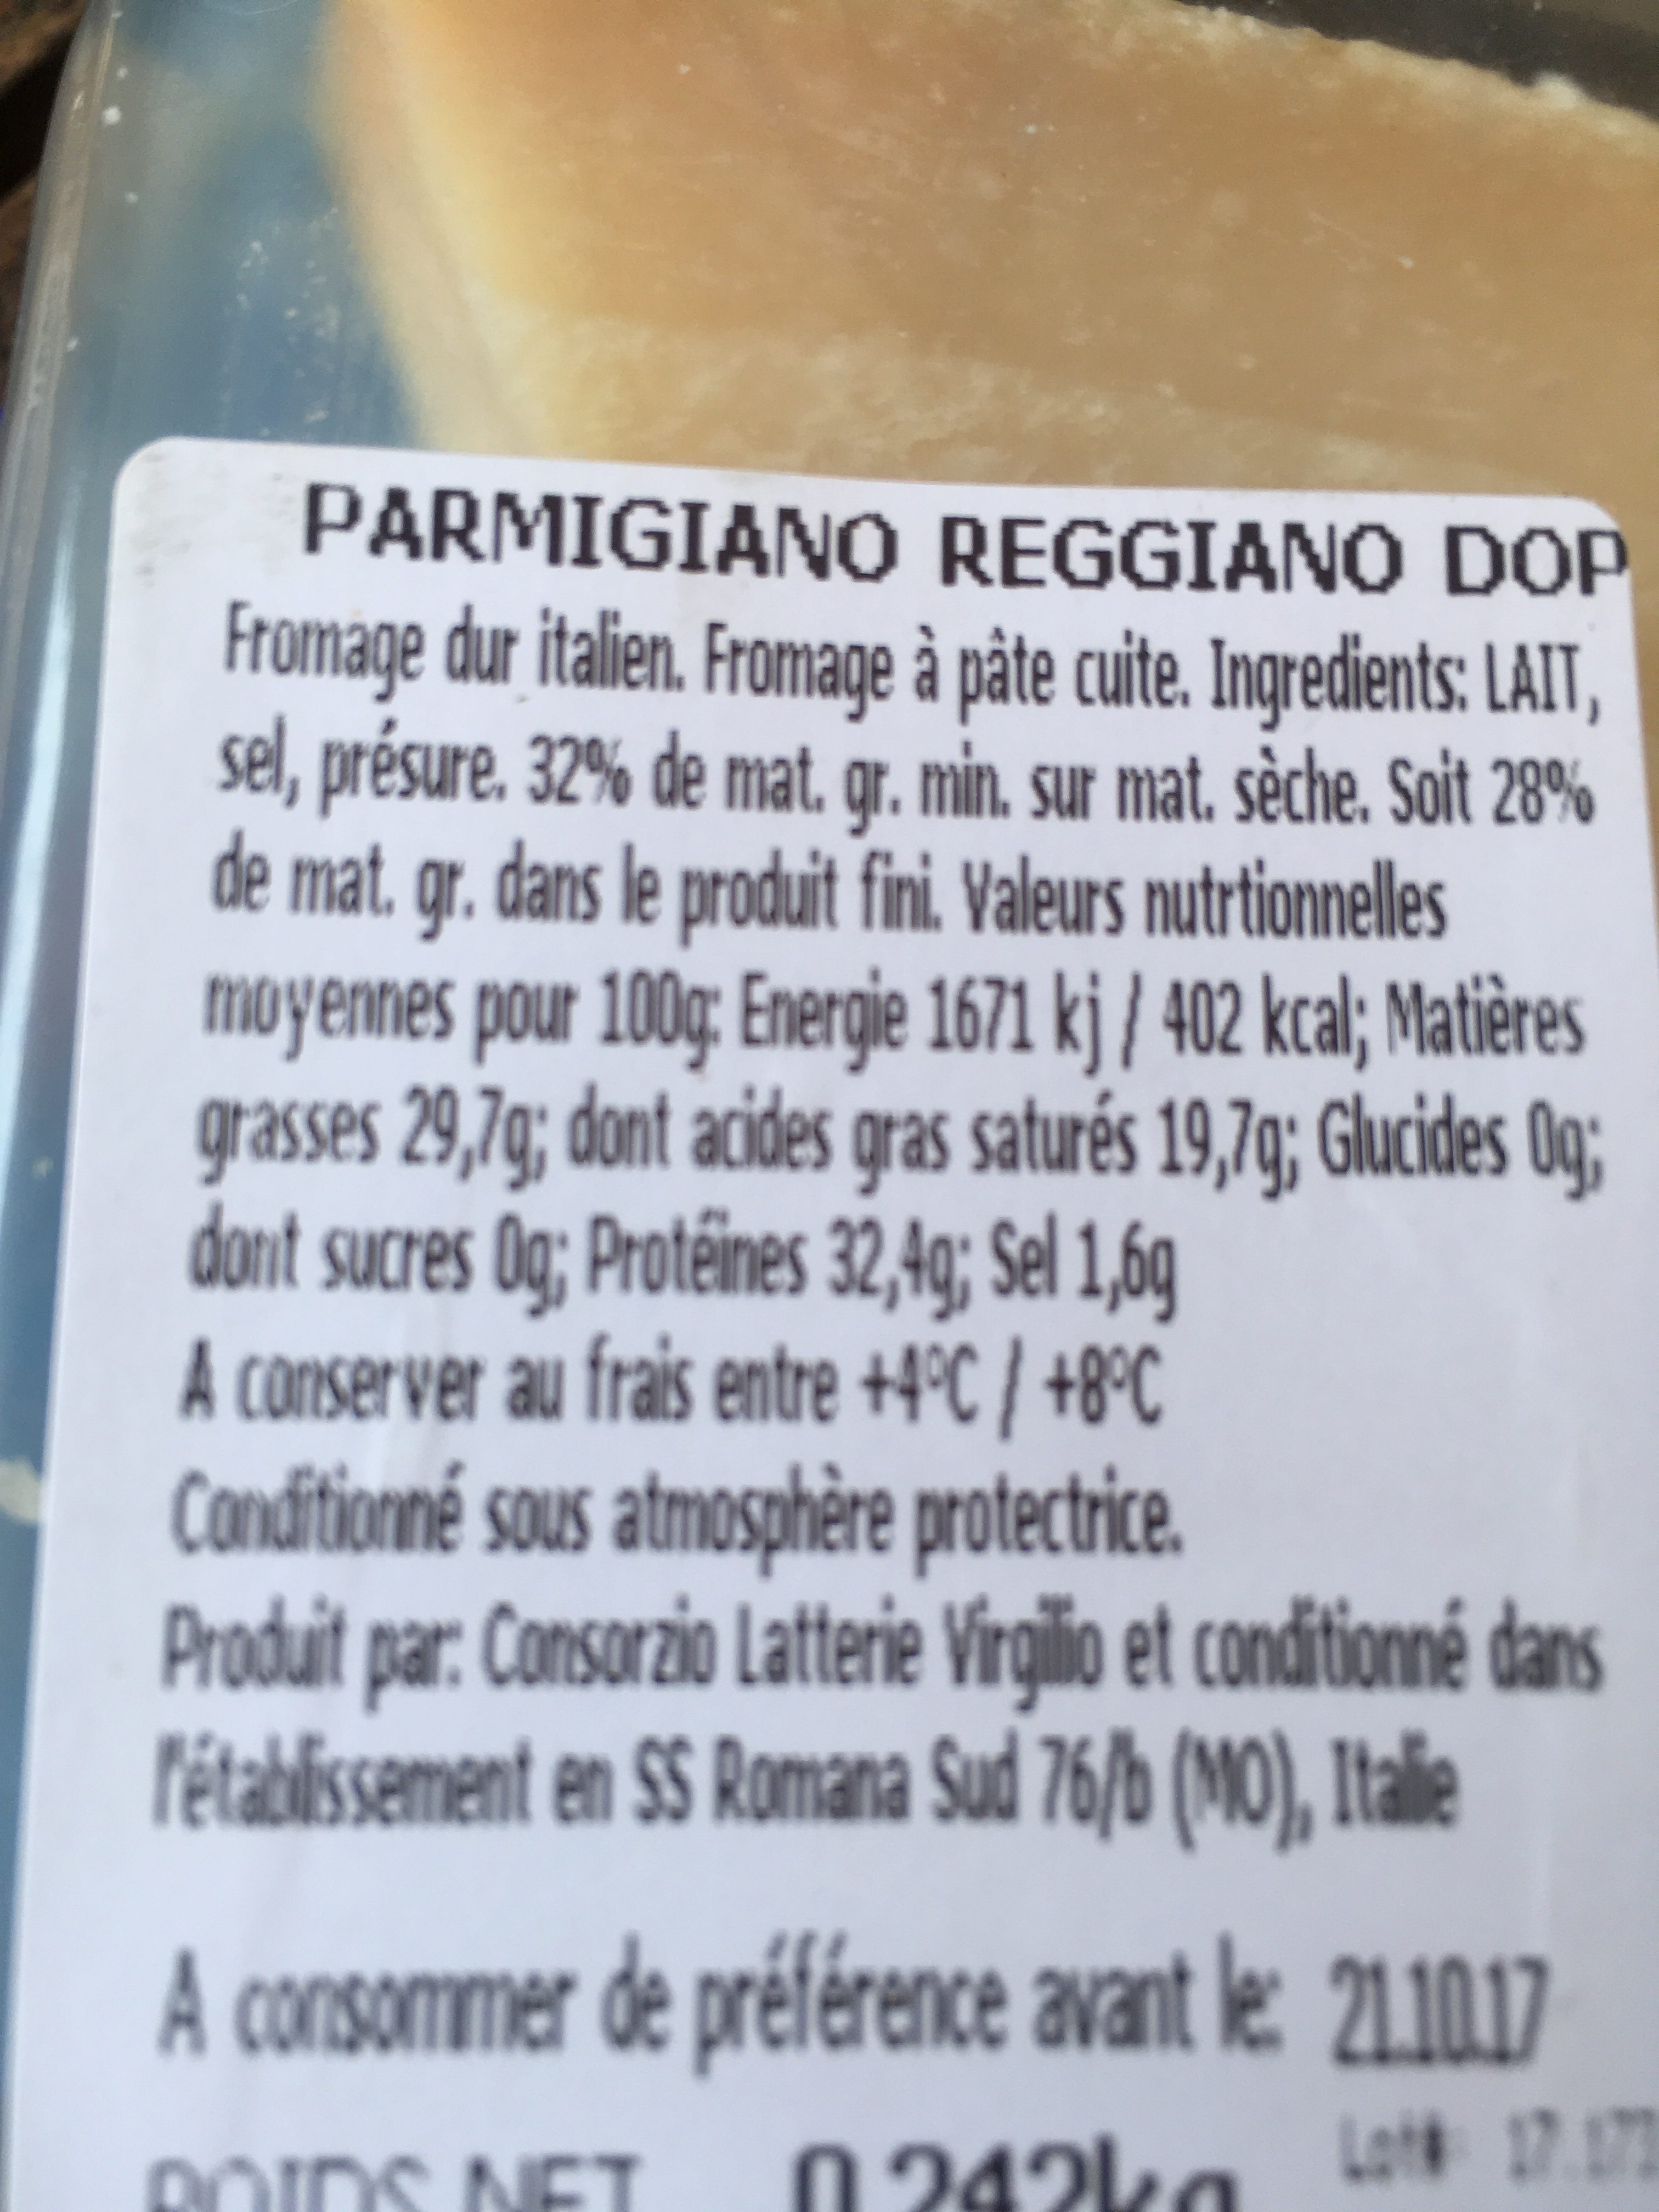 Parmigiano reggiano - Fromage dur italien - Fromage à pâte cuite - Ingredients - fr